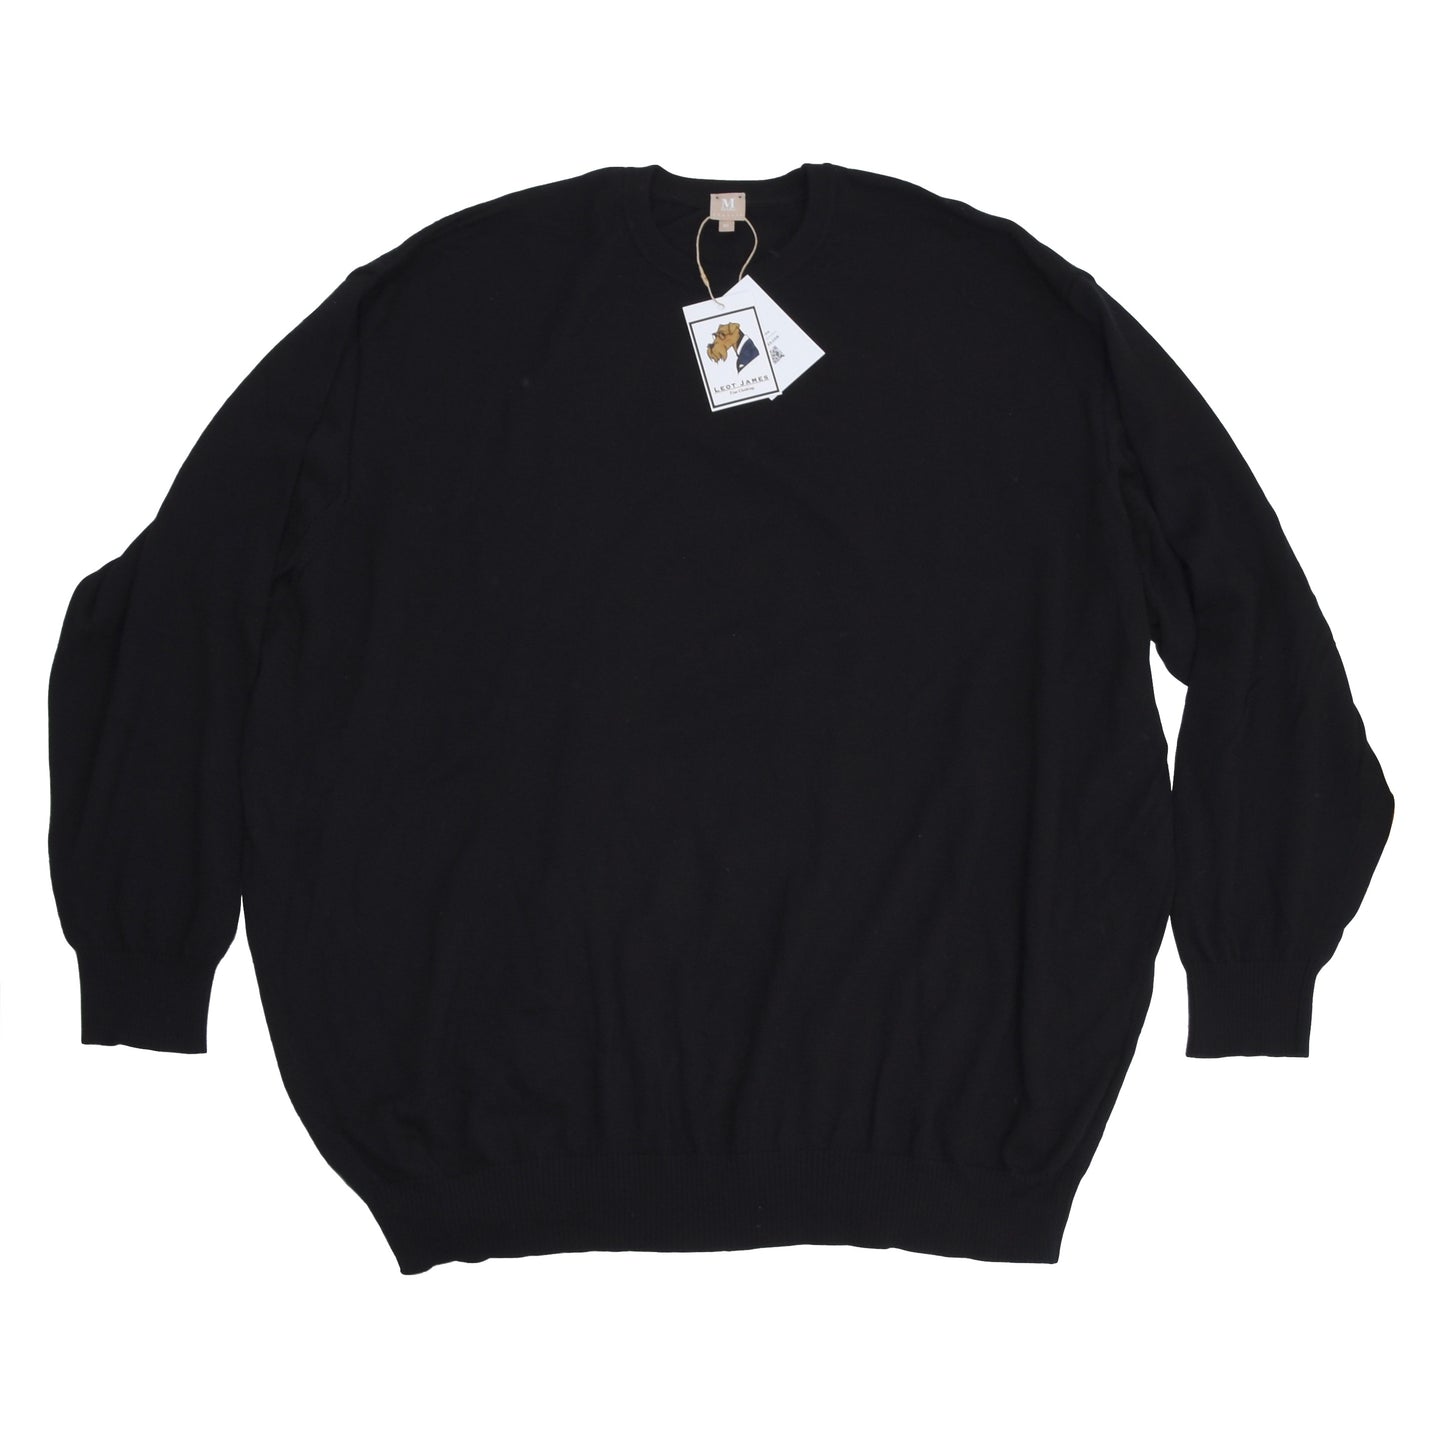 März Wool Sweater Size 66 - Black